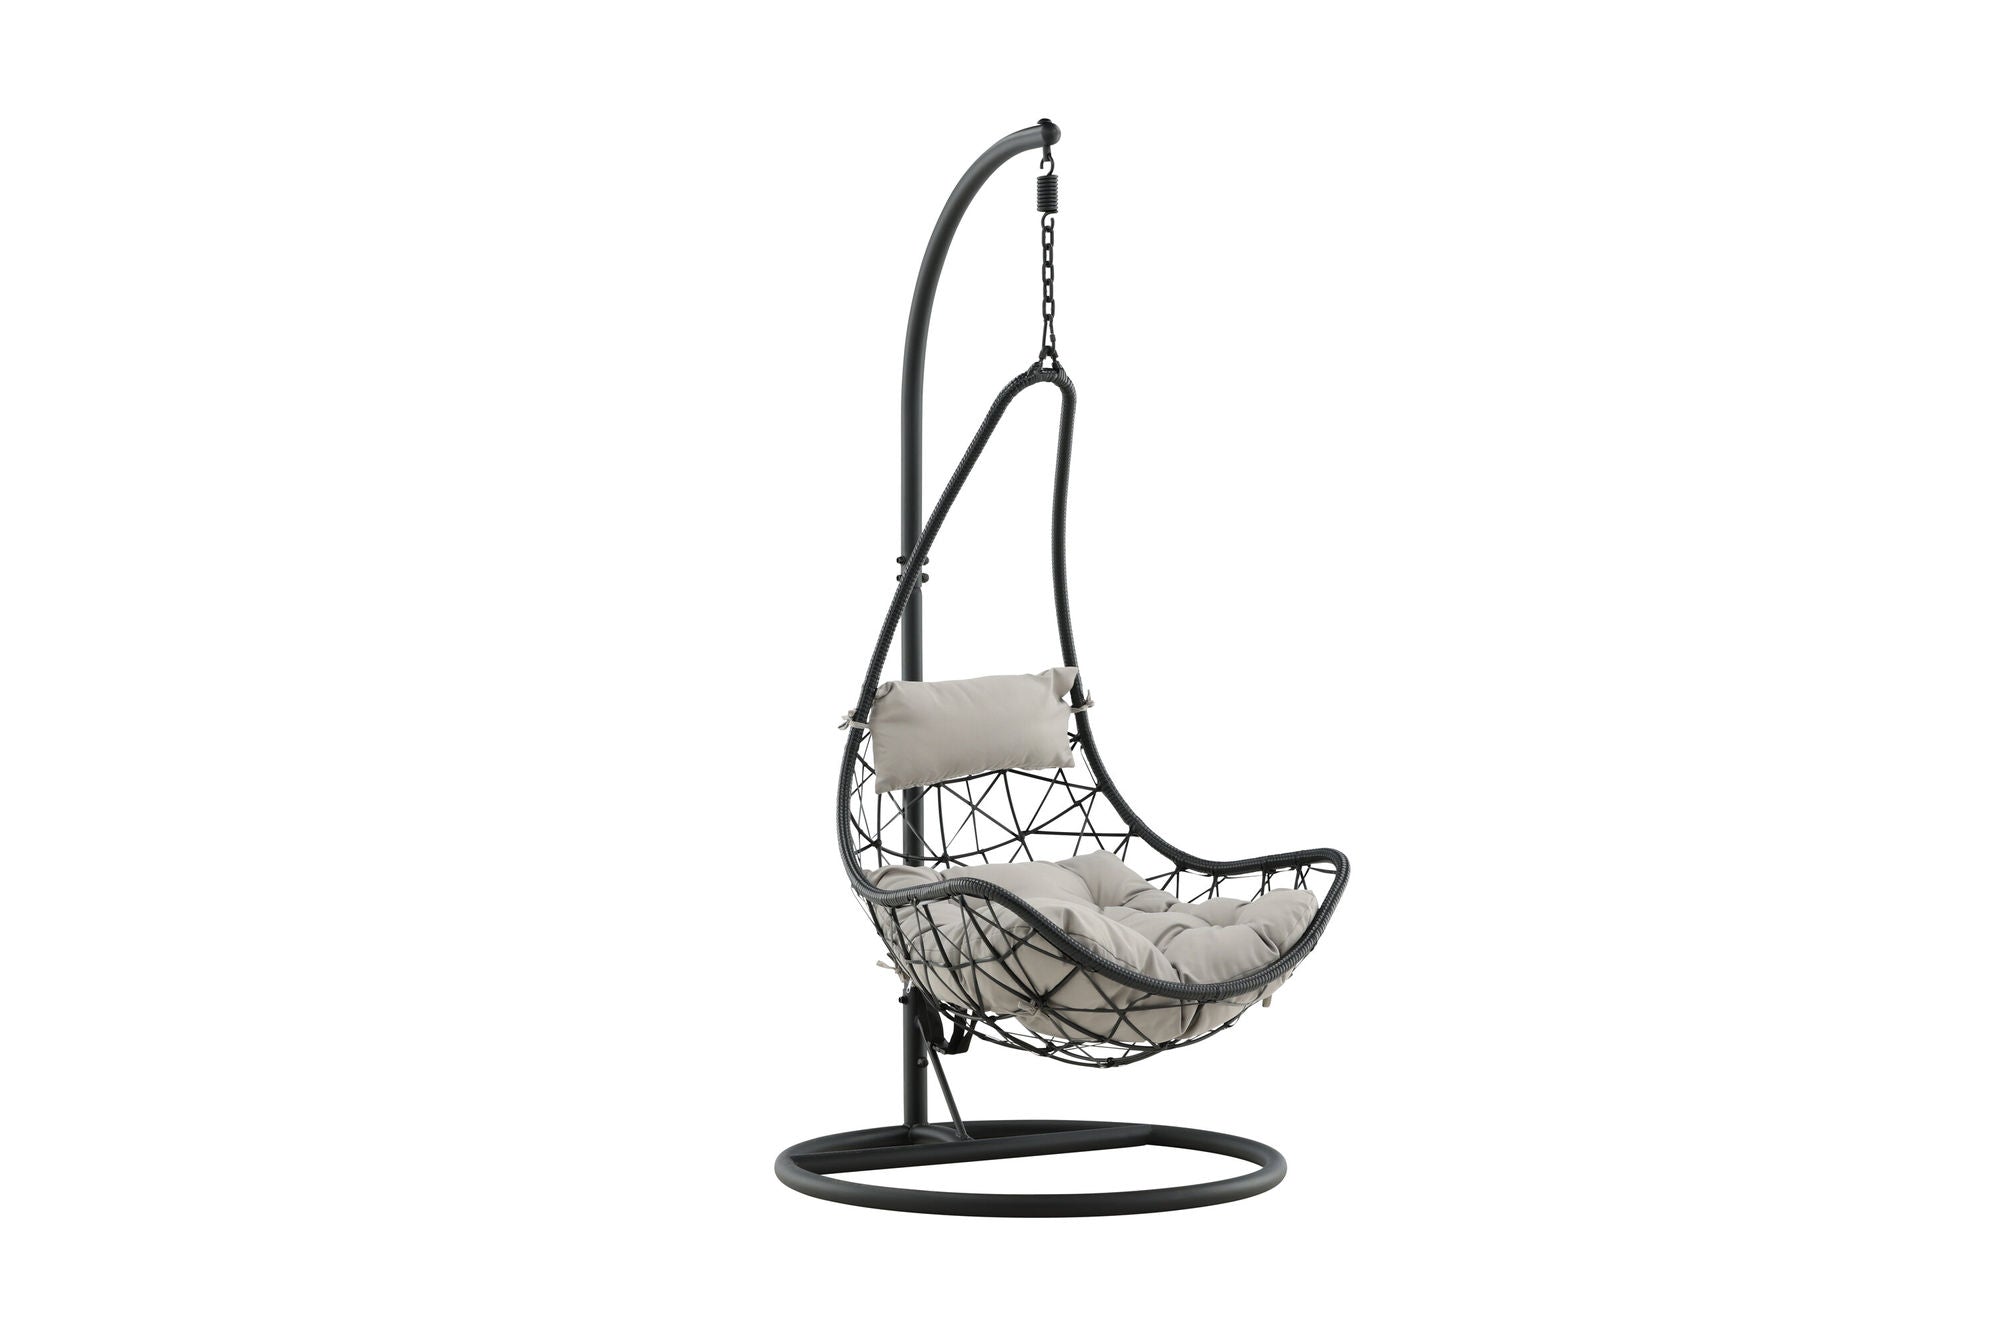 Venture Home Vide Hanging Chair - Black Frame / Black Wicker / Grey Cushion